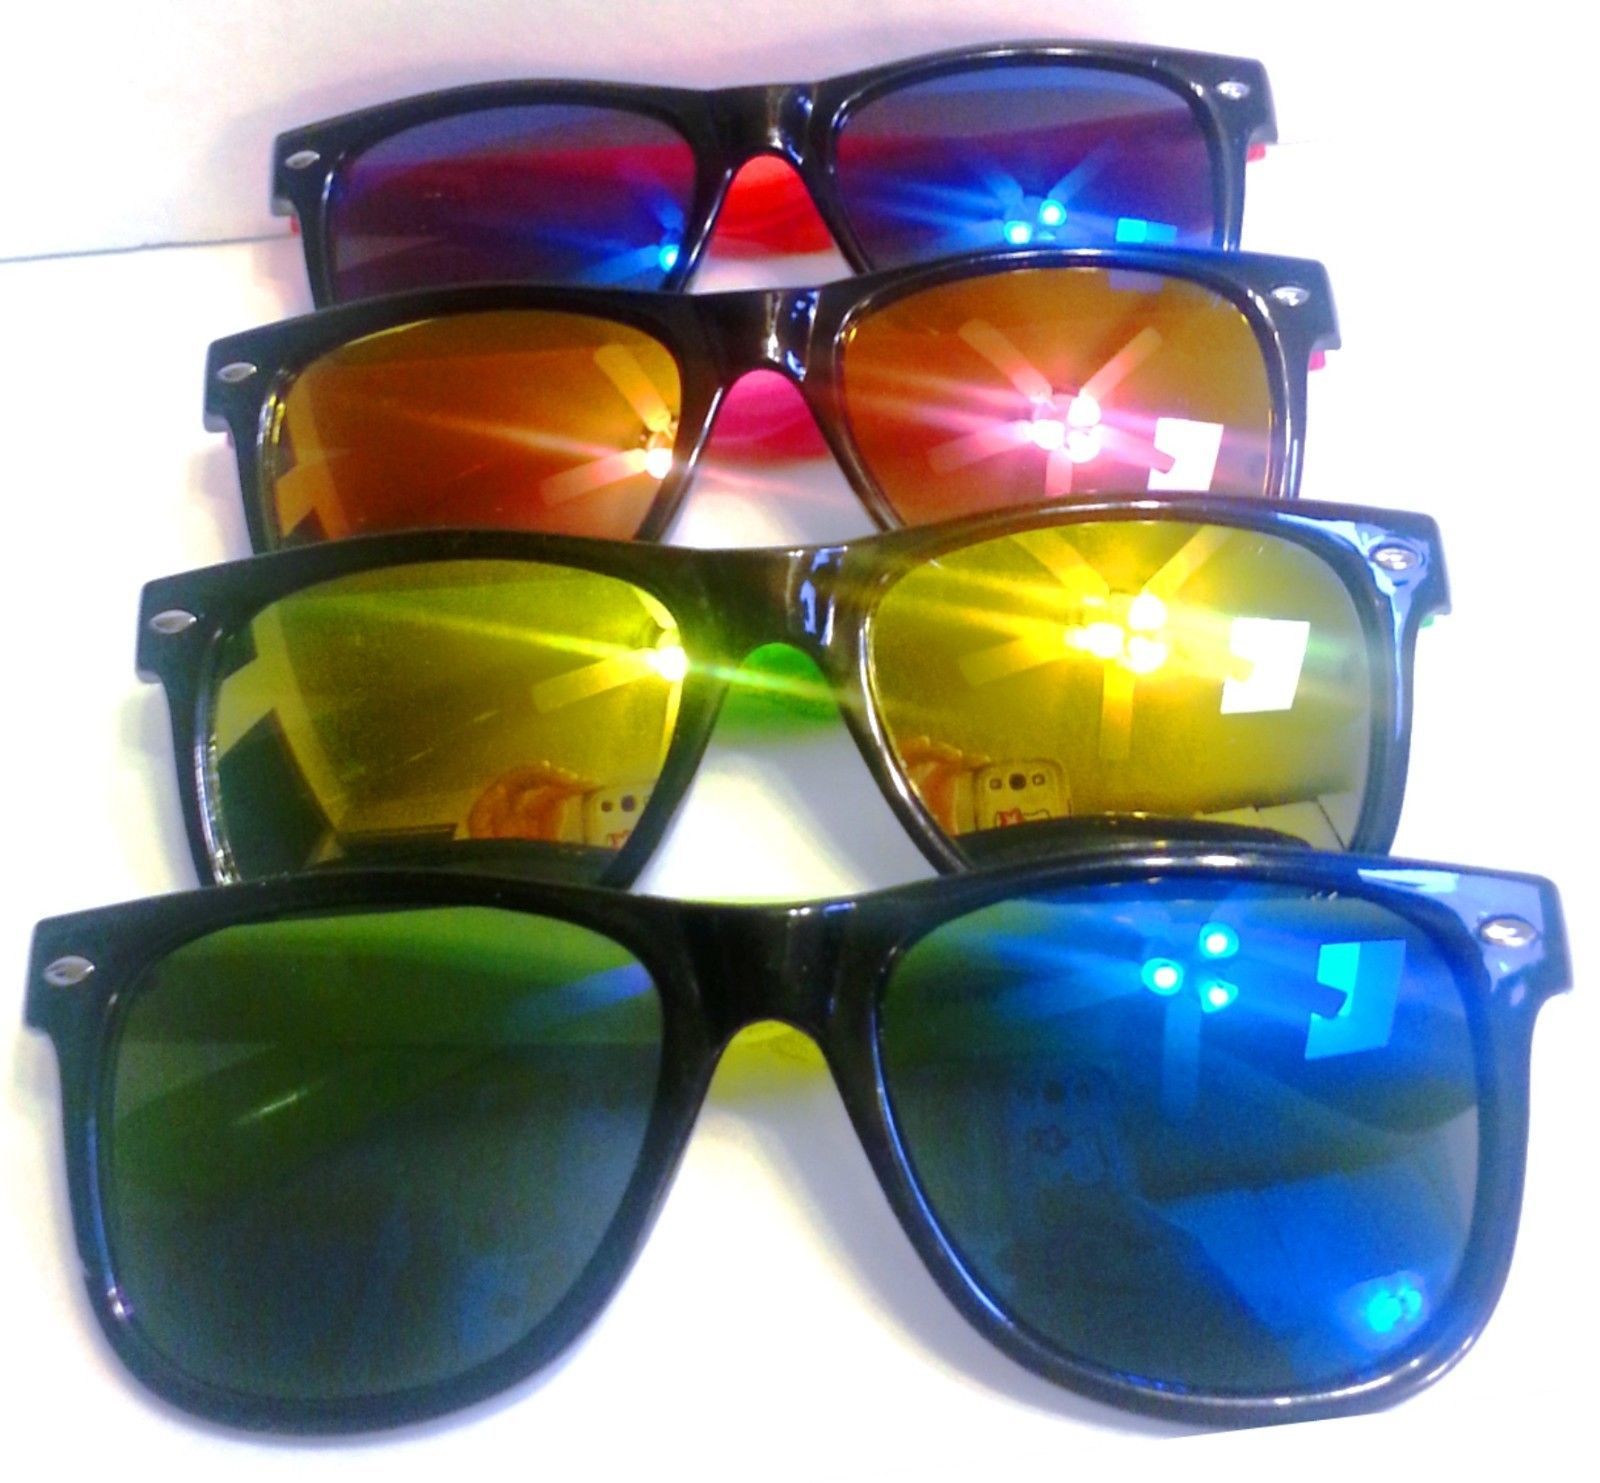 Wayfarer Sunglasses Multi Color Mirrored Lenses Black Frame Colored Arms Sunglasses